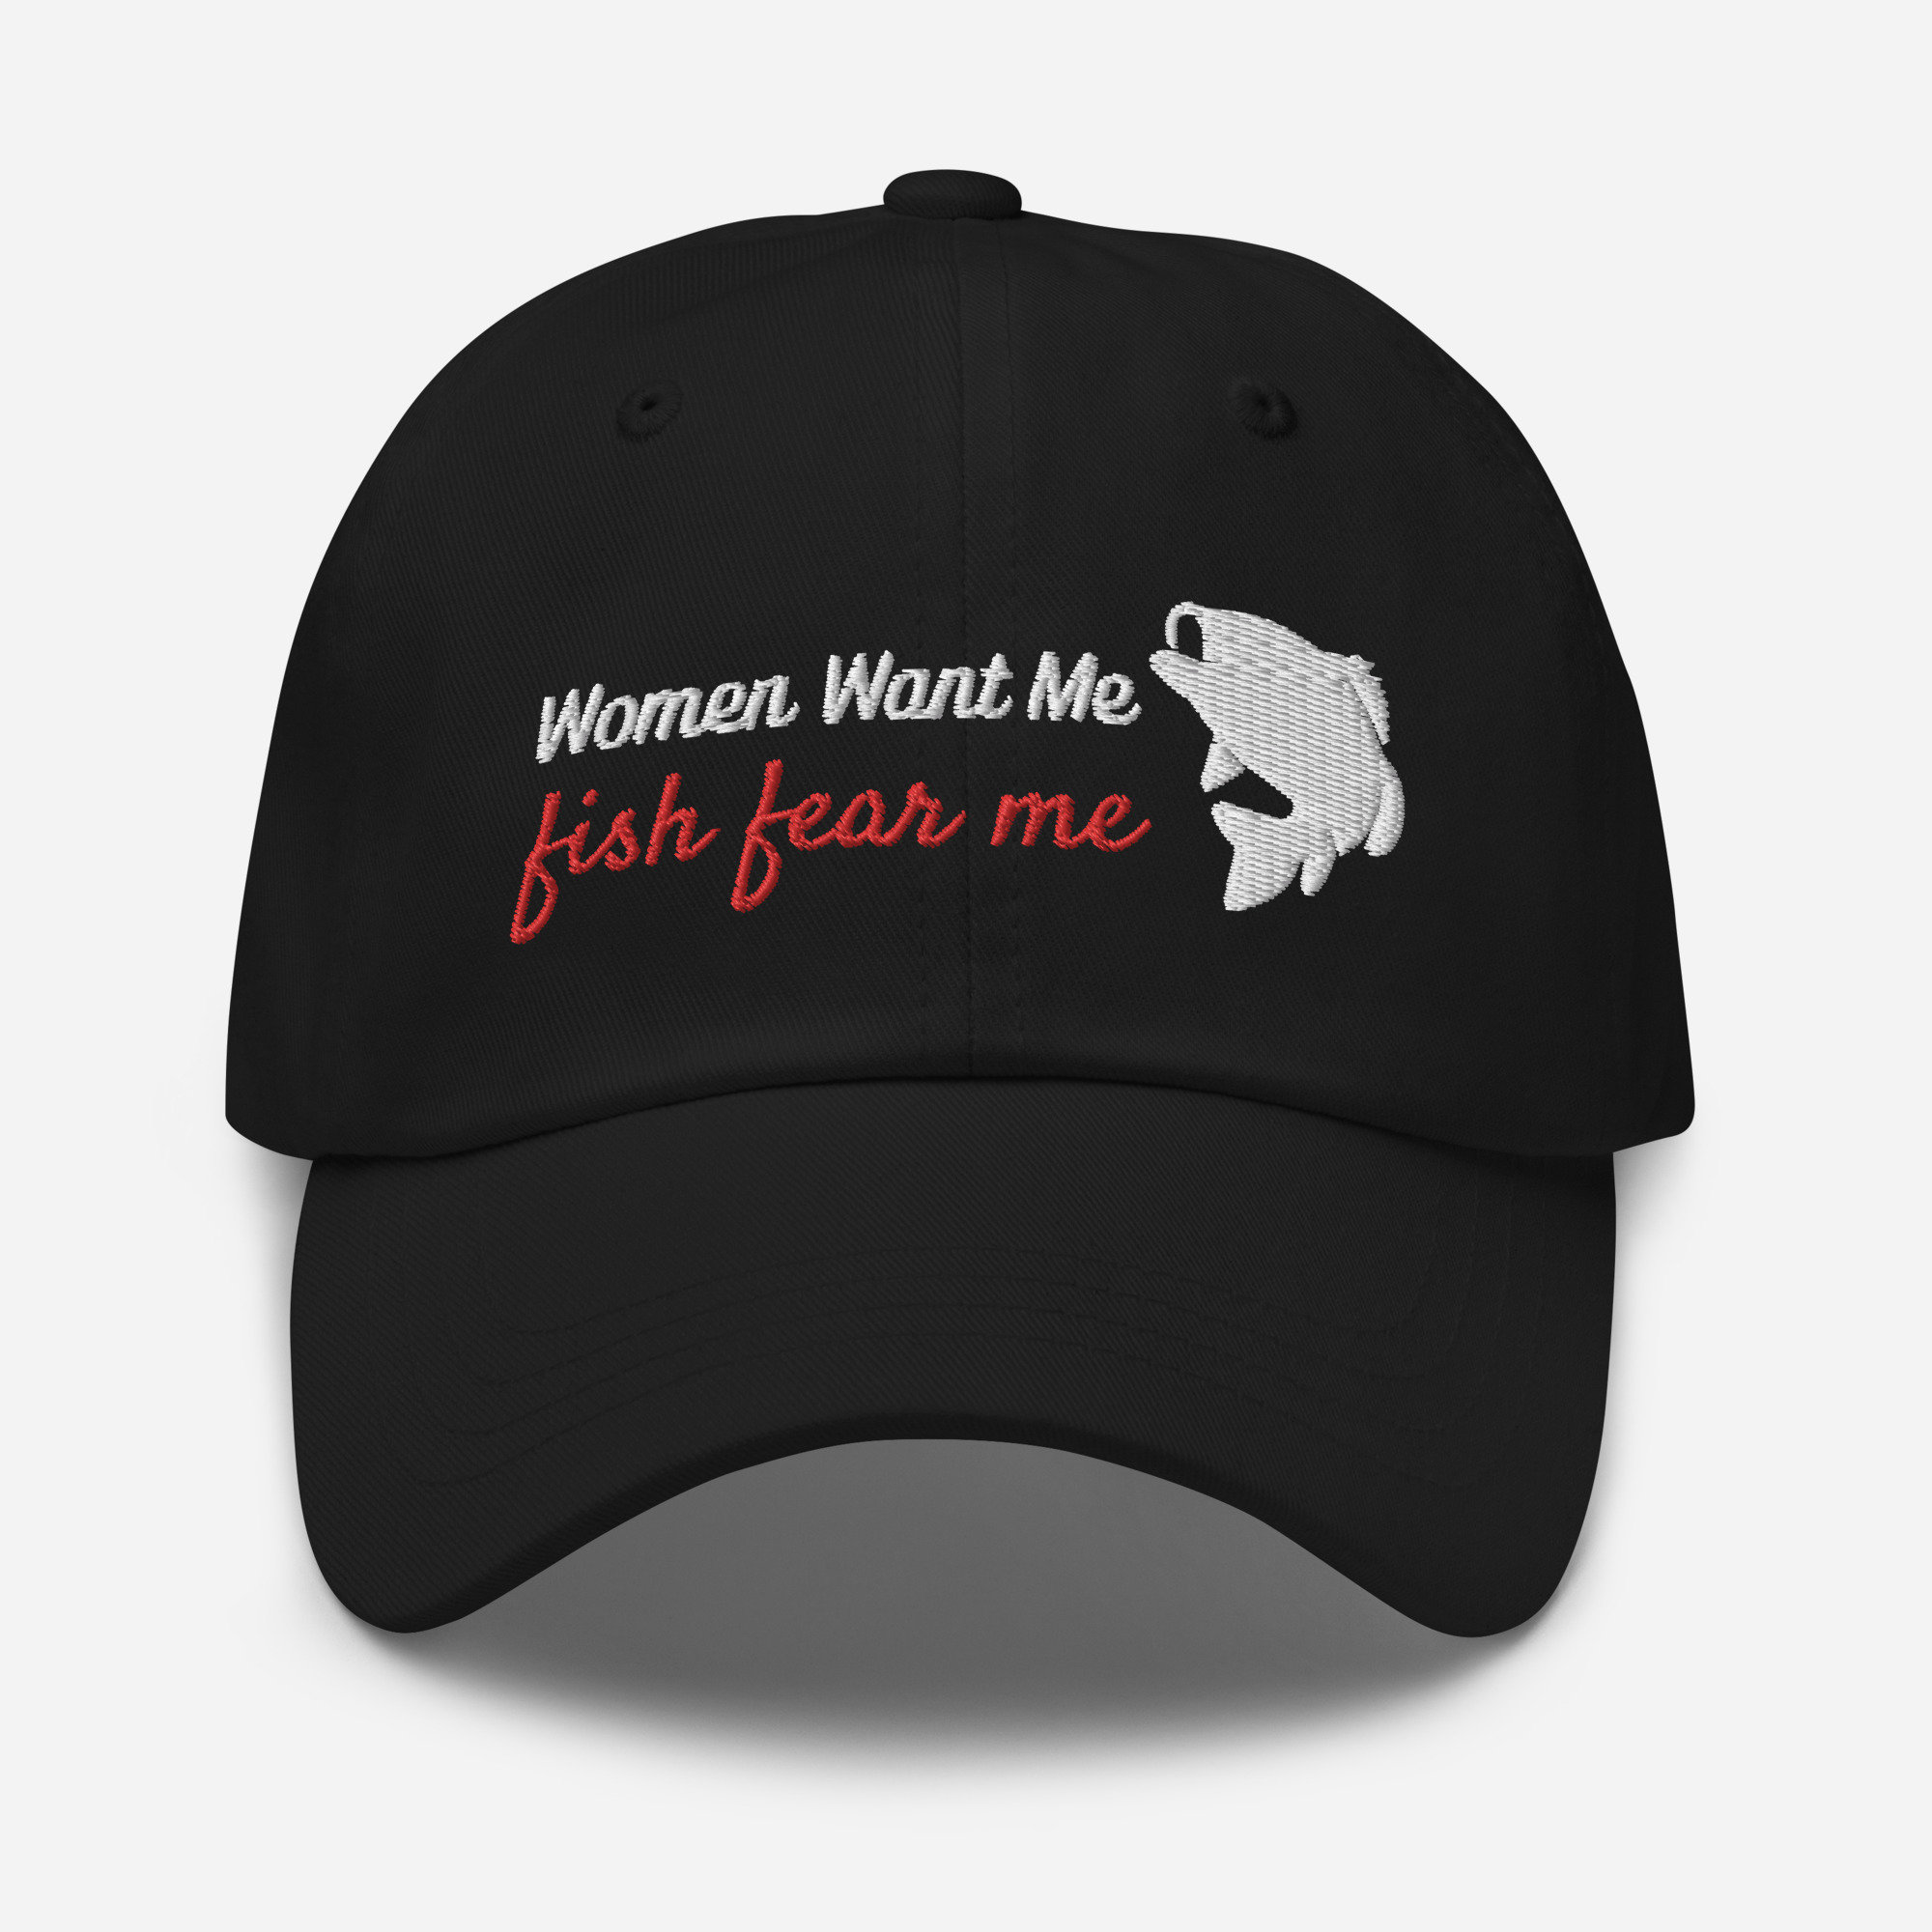 Women Want Me, Fish Fear Me Hat -  Canada